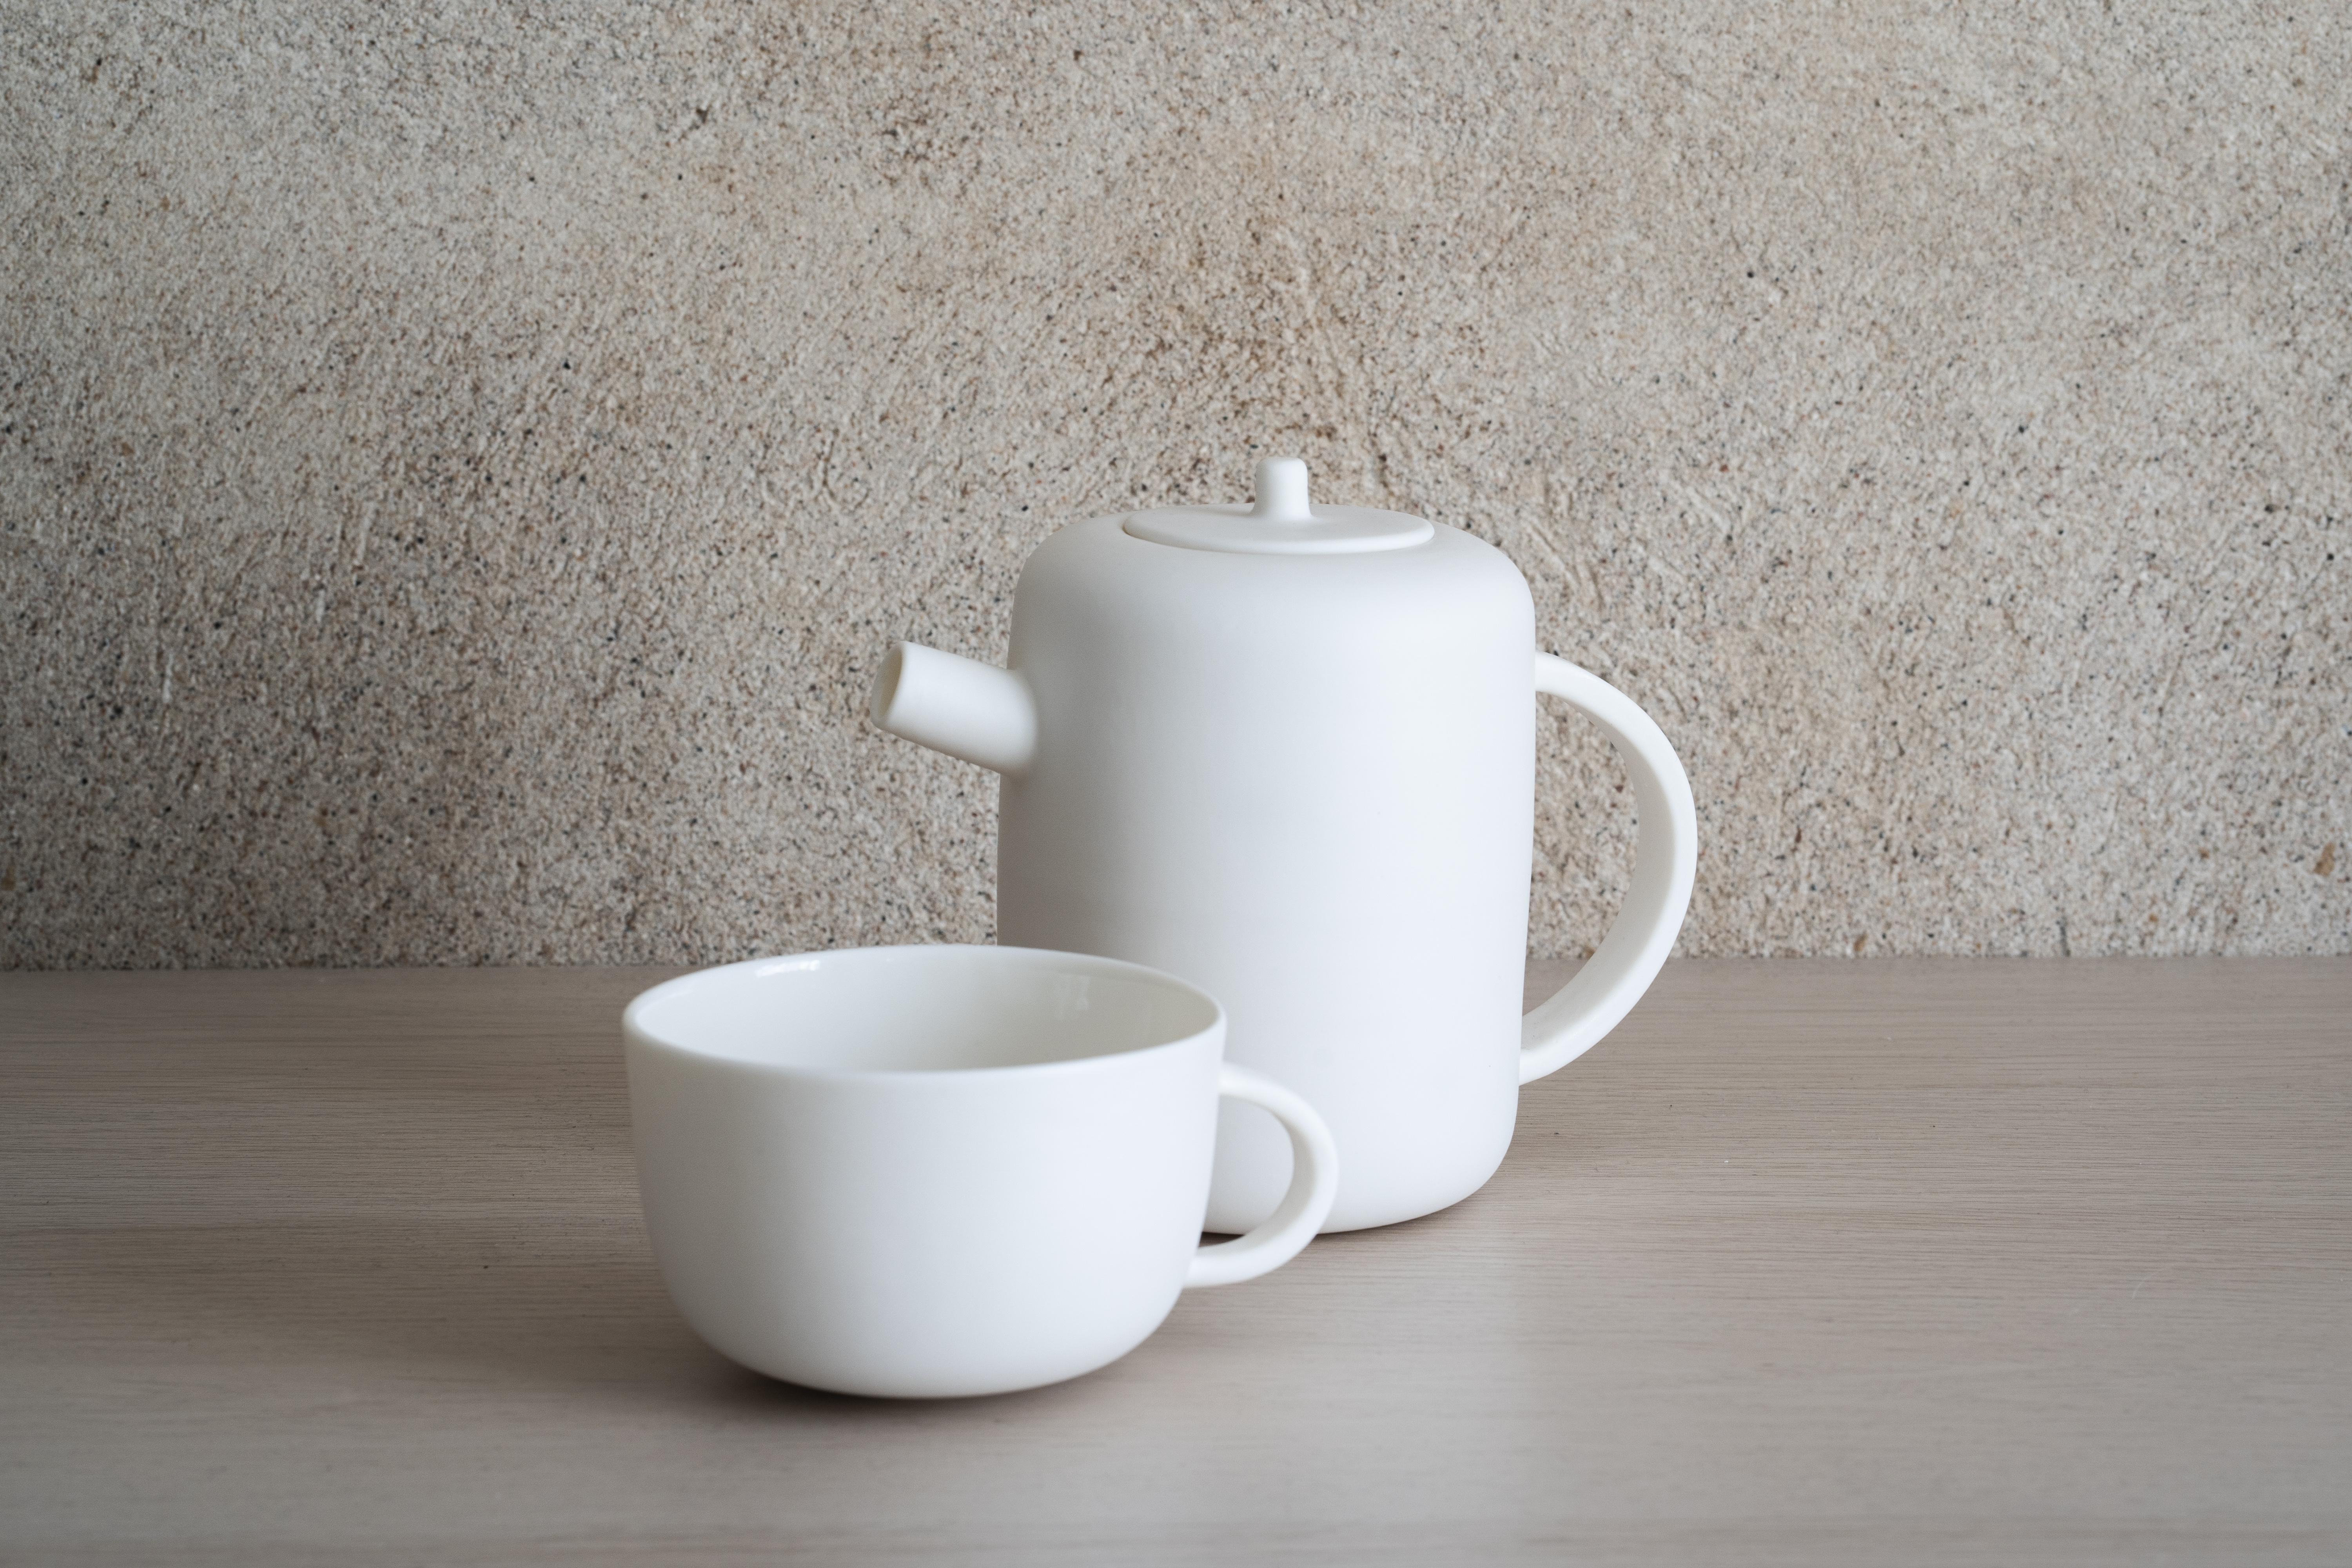 Silent teapot is a porcelain handmade teapot made by the designer in Helsinki,Finland.